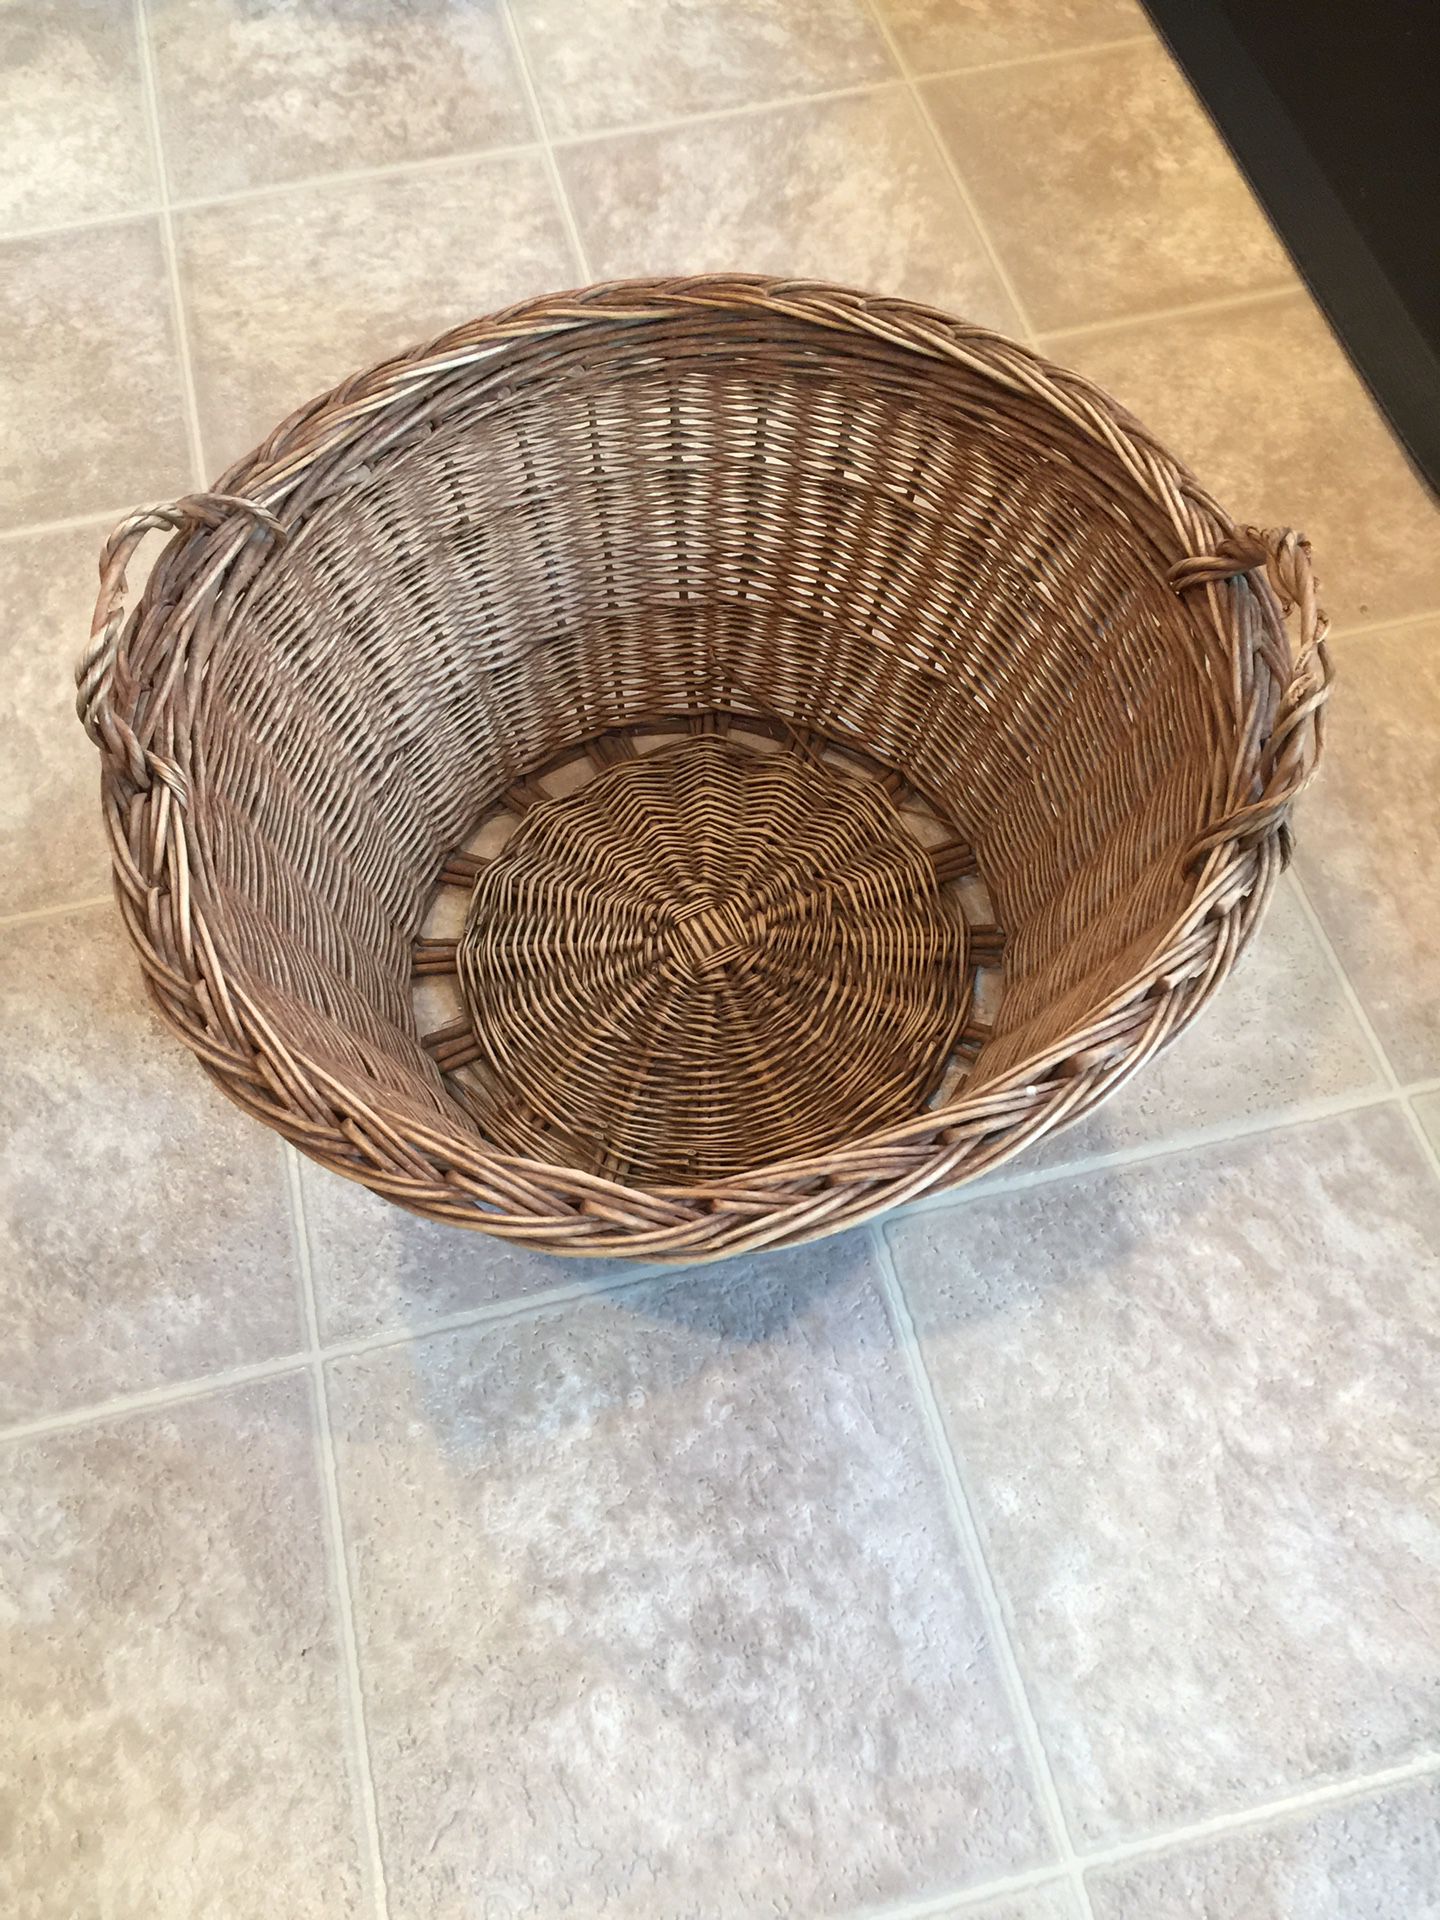 Antique wicker laundry basket.